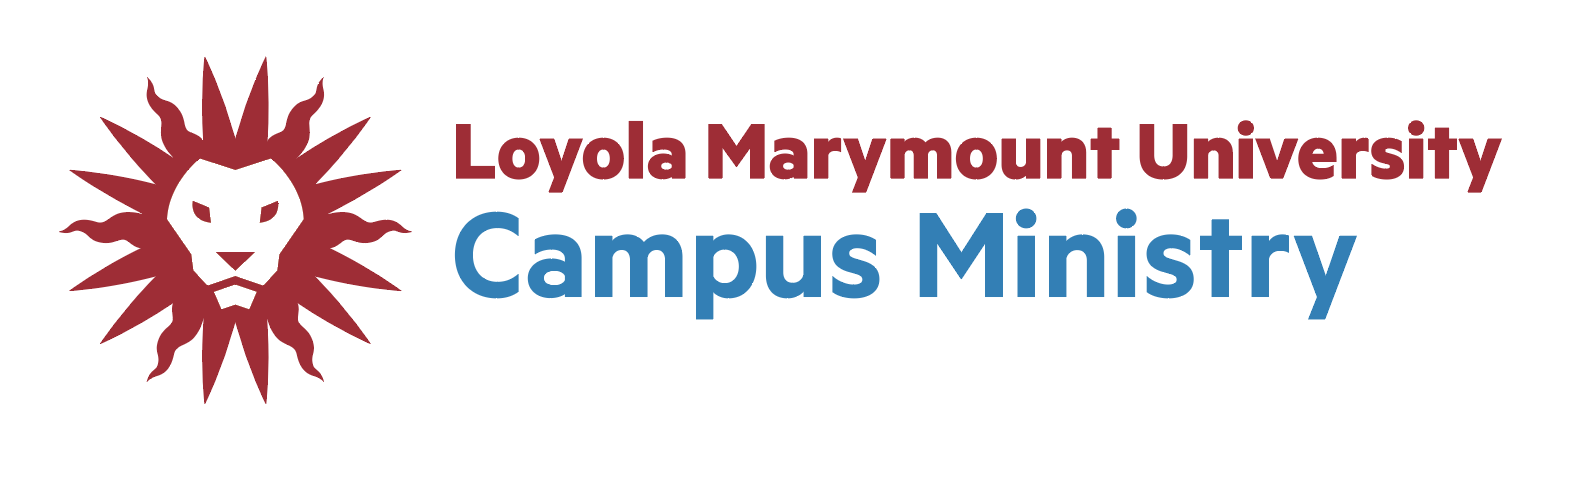 LMU Campus Ministry logo